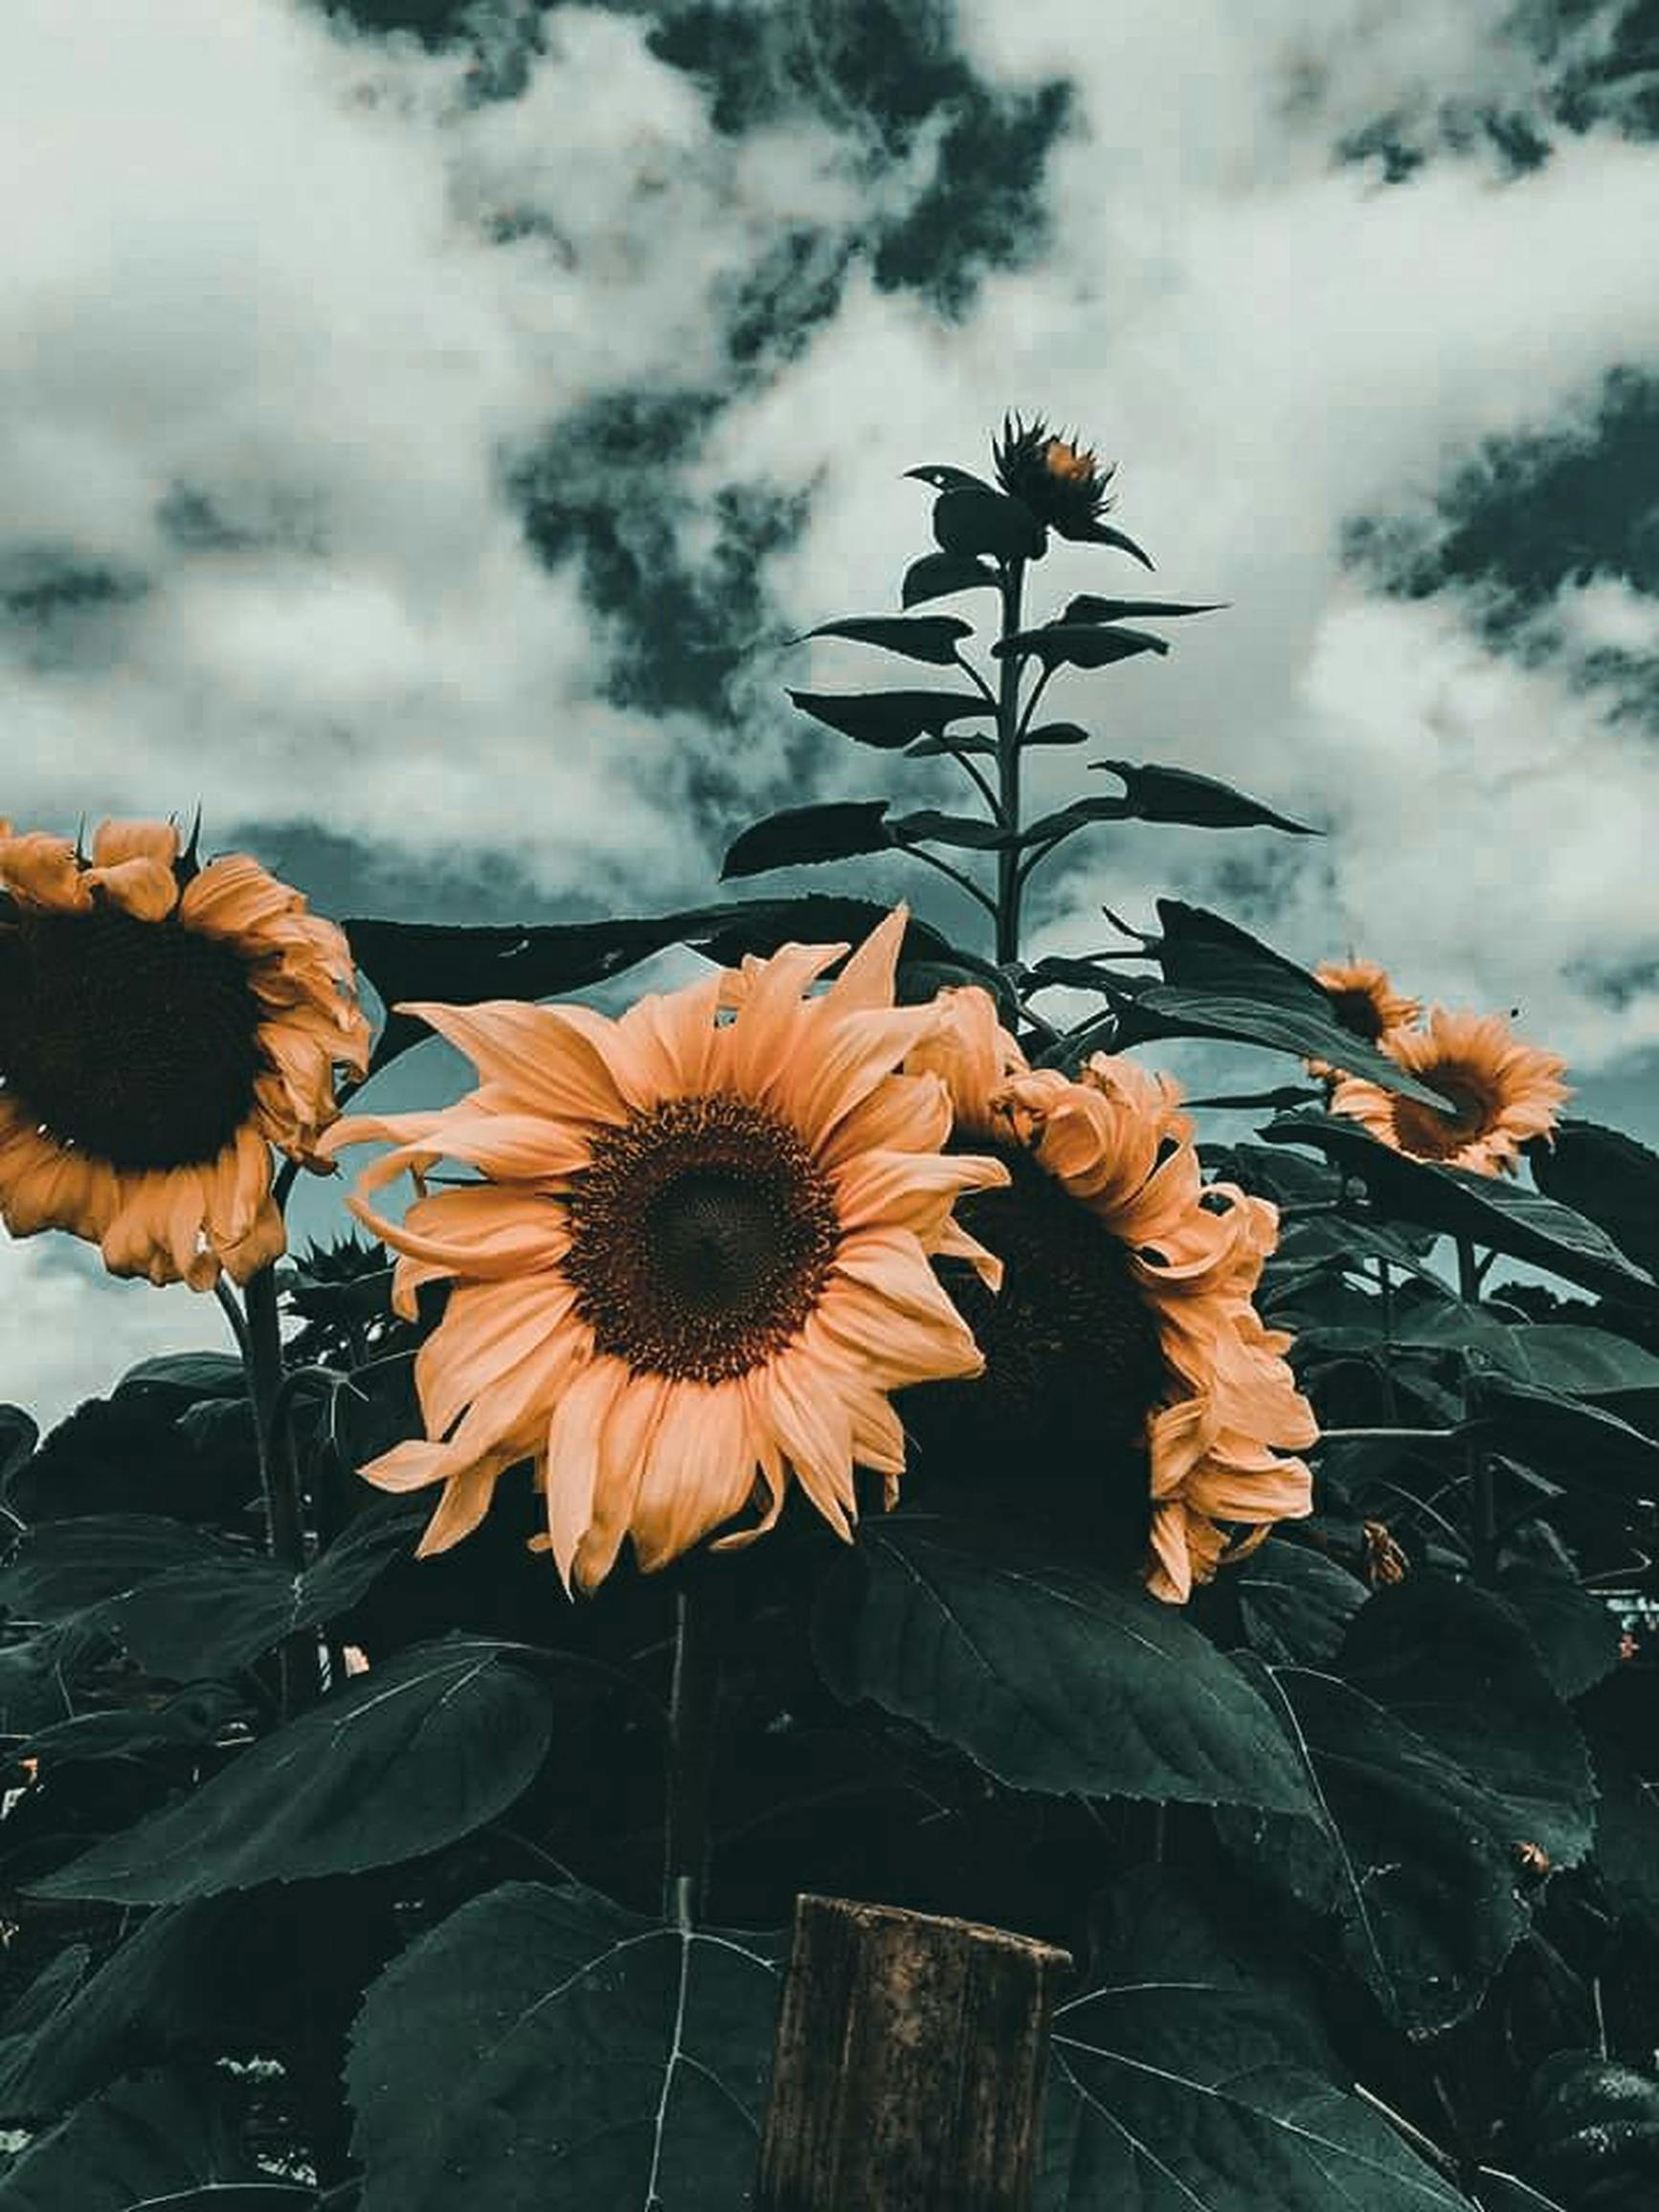 250 Engaging Sunflowers Photos  Pexels  Free Stock Photos